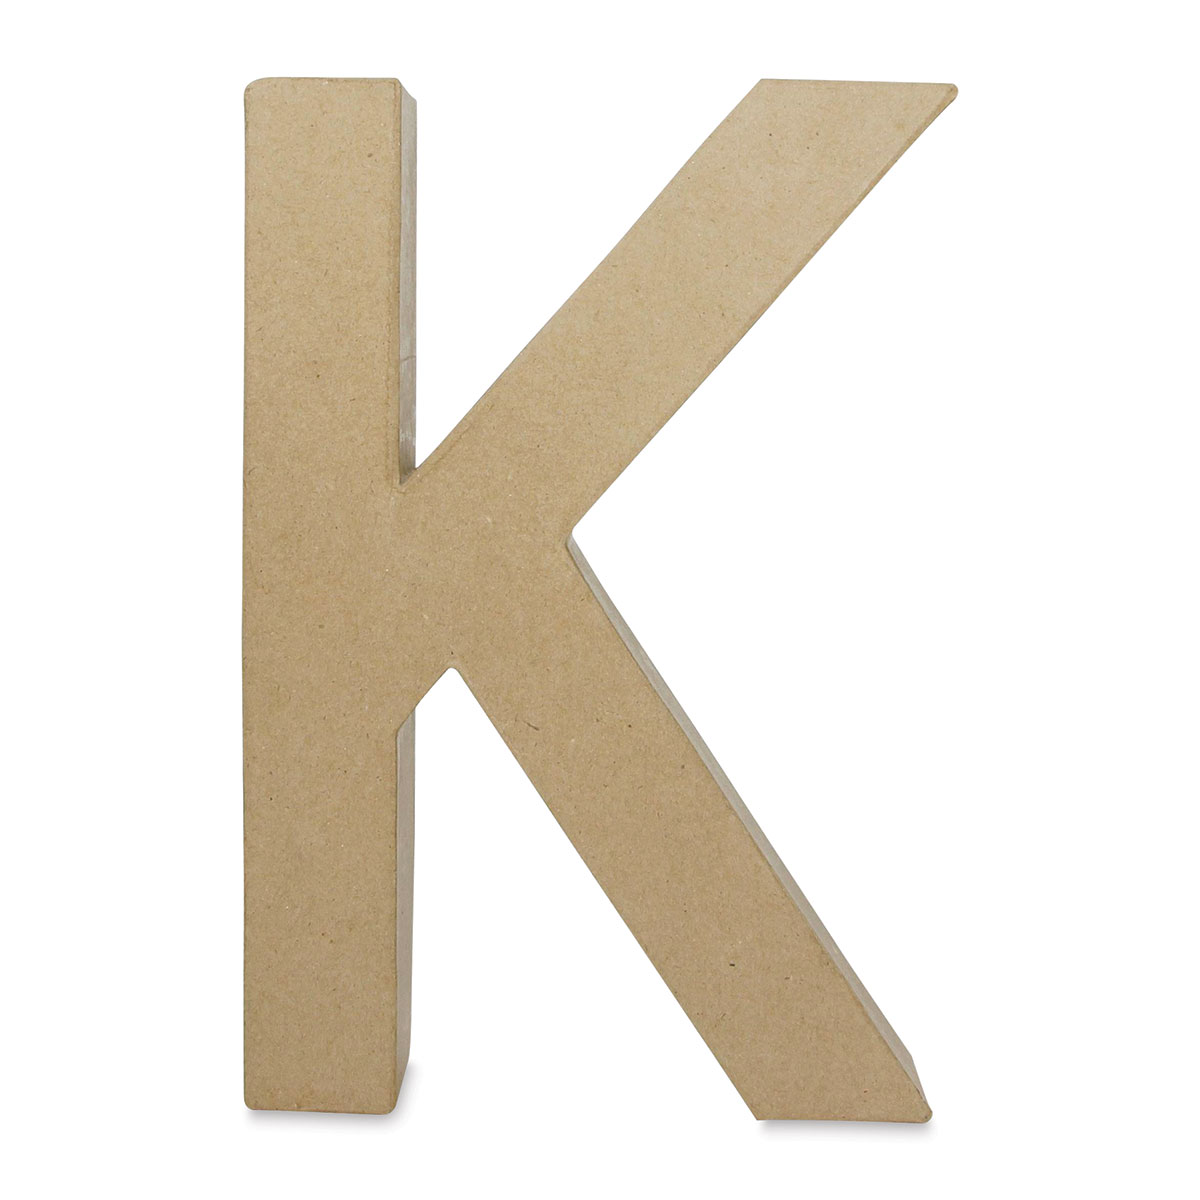 DecoPatch Paper Mache Funny Letter - K, Uppercase, 8-1/2' W x 12' H x 2' D